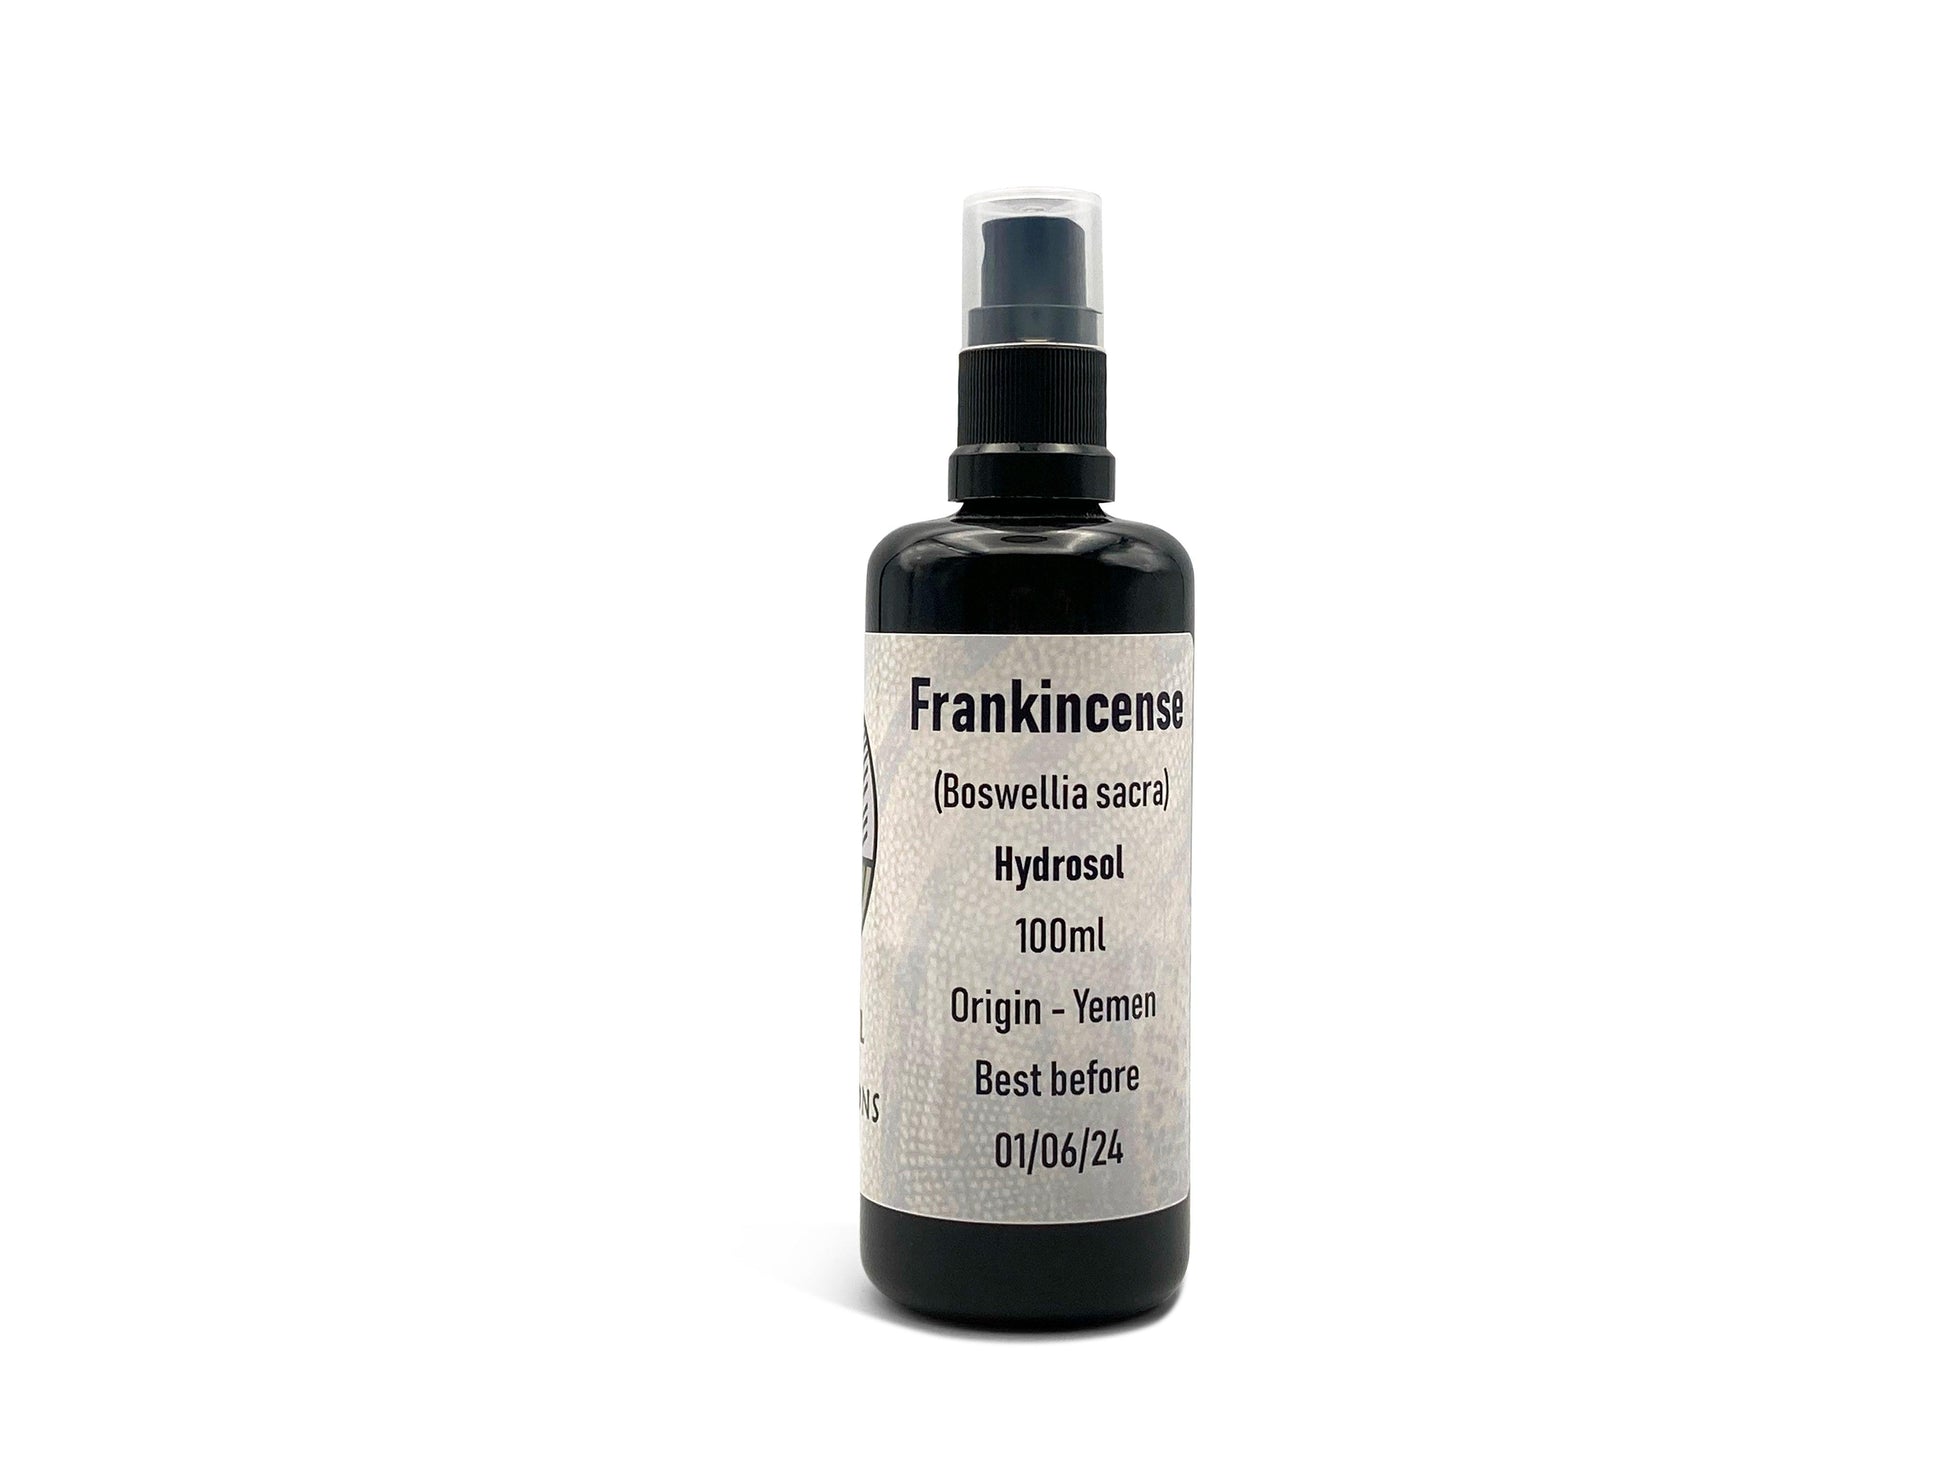 Frankincense Hydrosol - Herbaldimensions.com